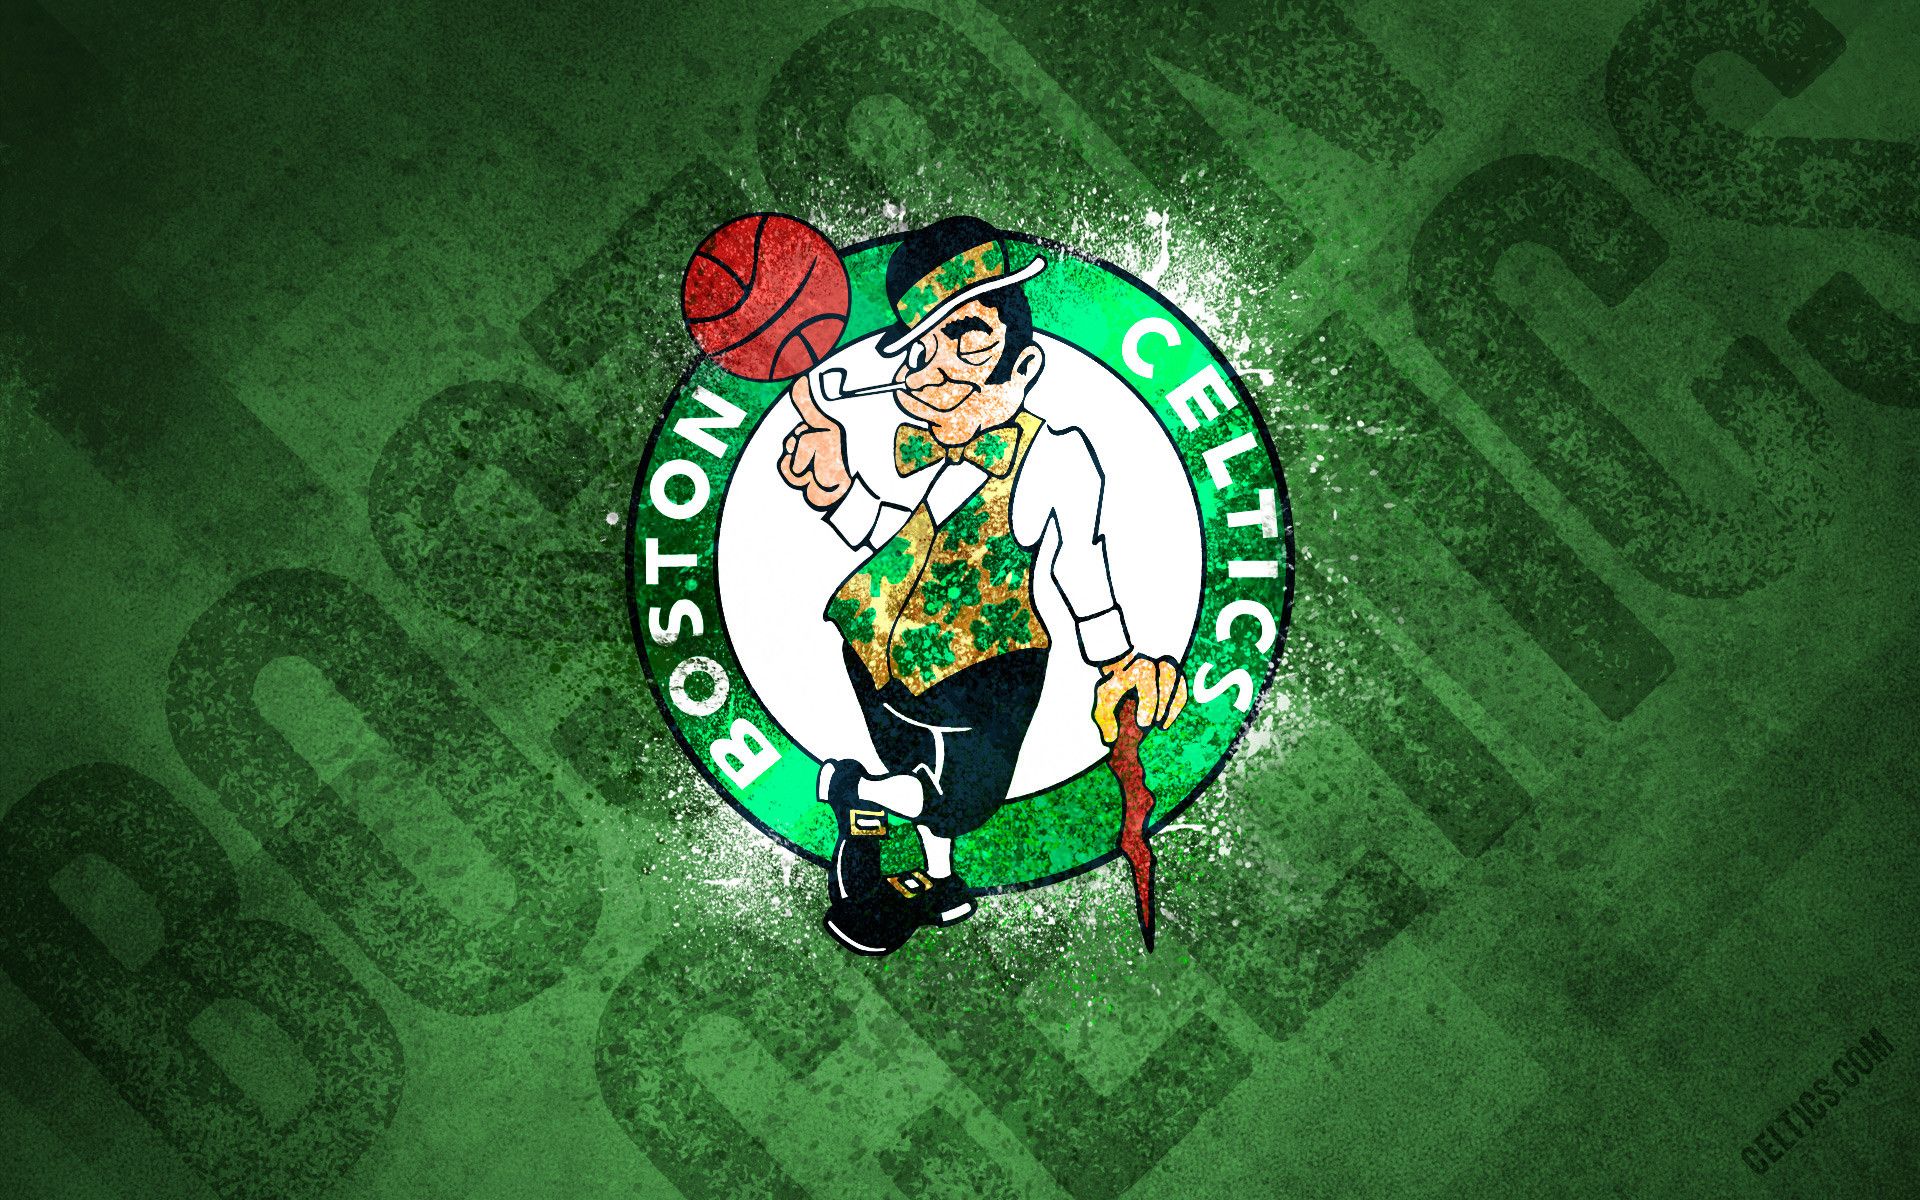 Boston Celtics Wallpapers on WallpaperDog